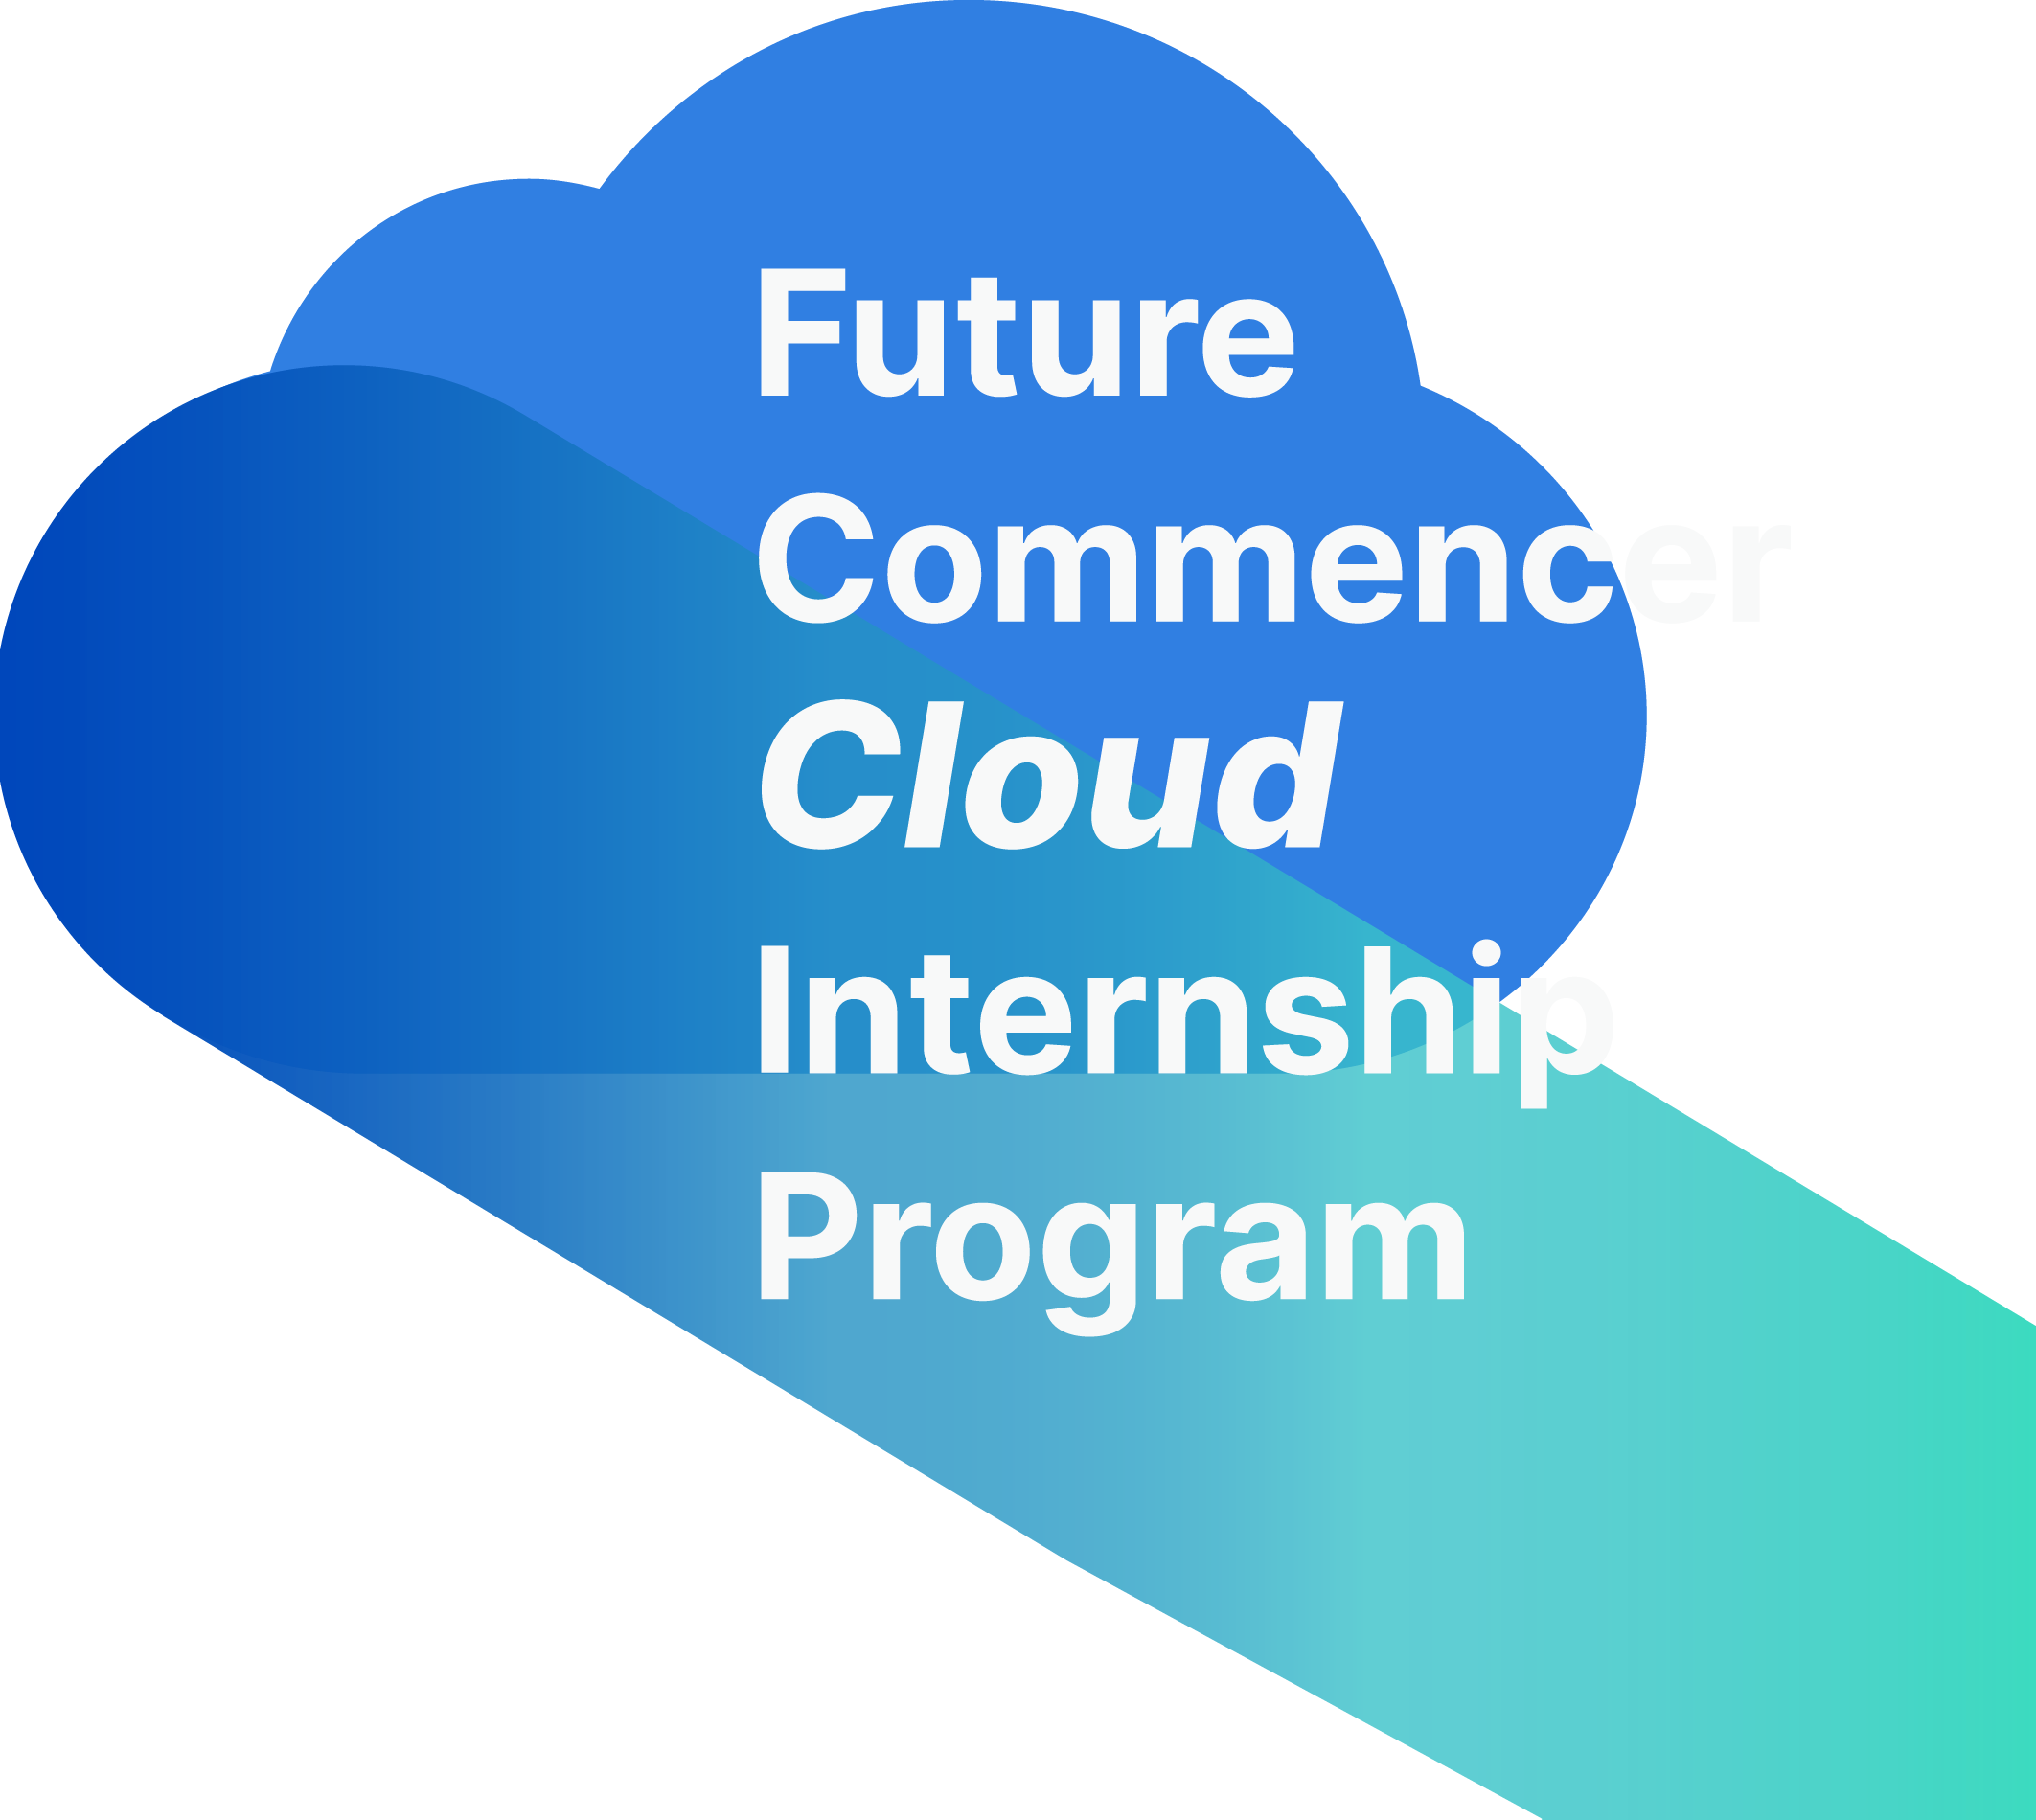 Future Commencer Internship Program 2023